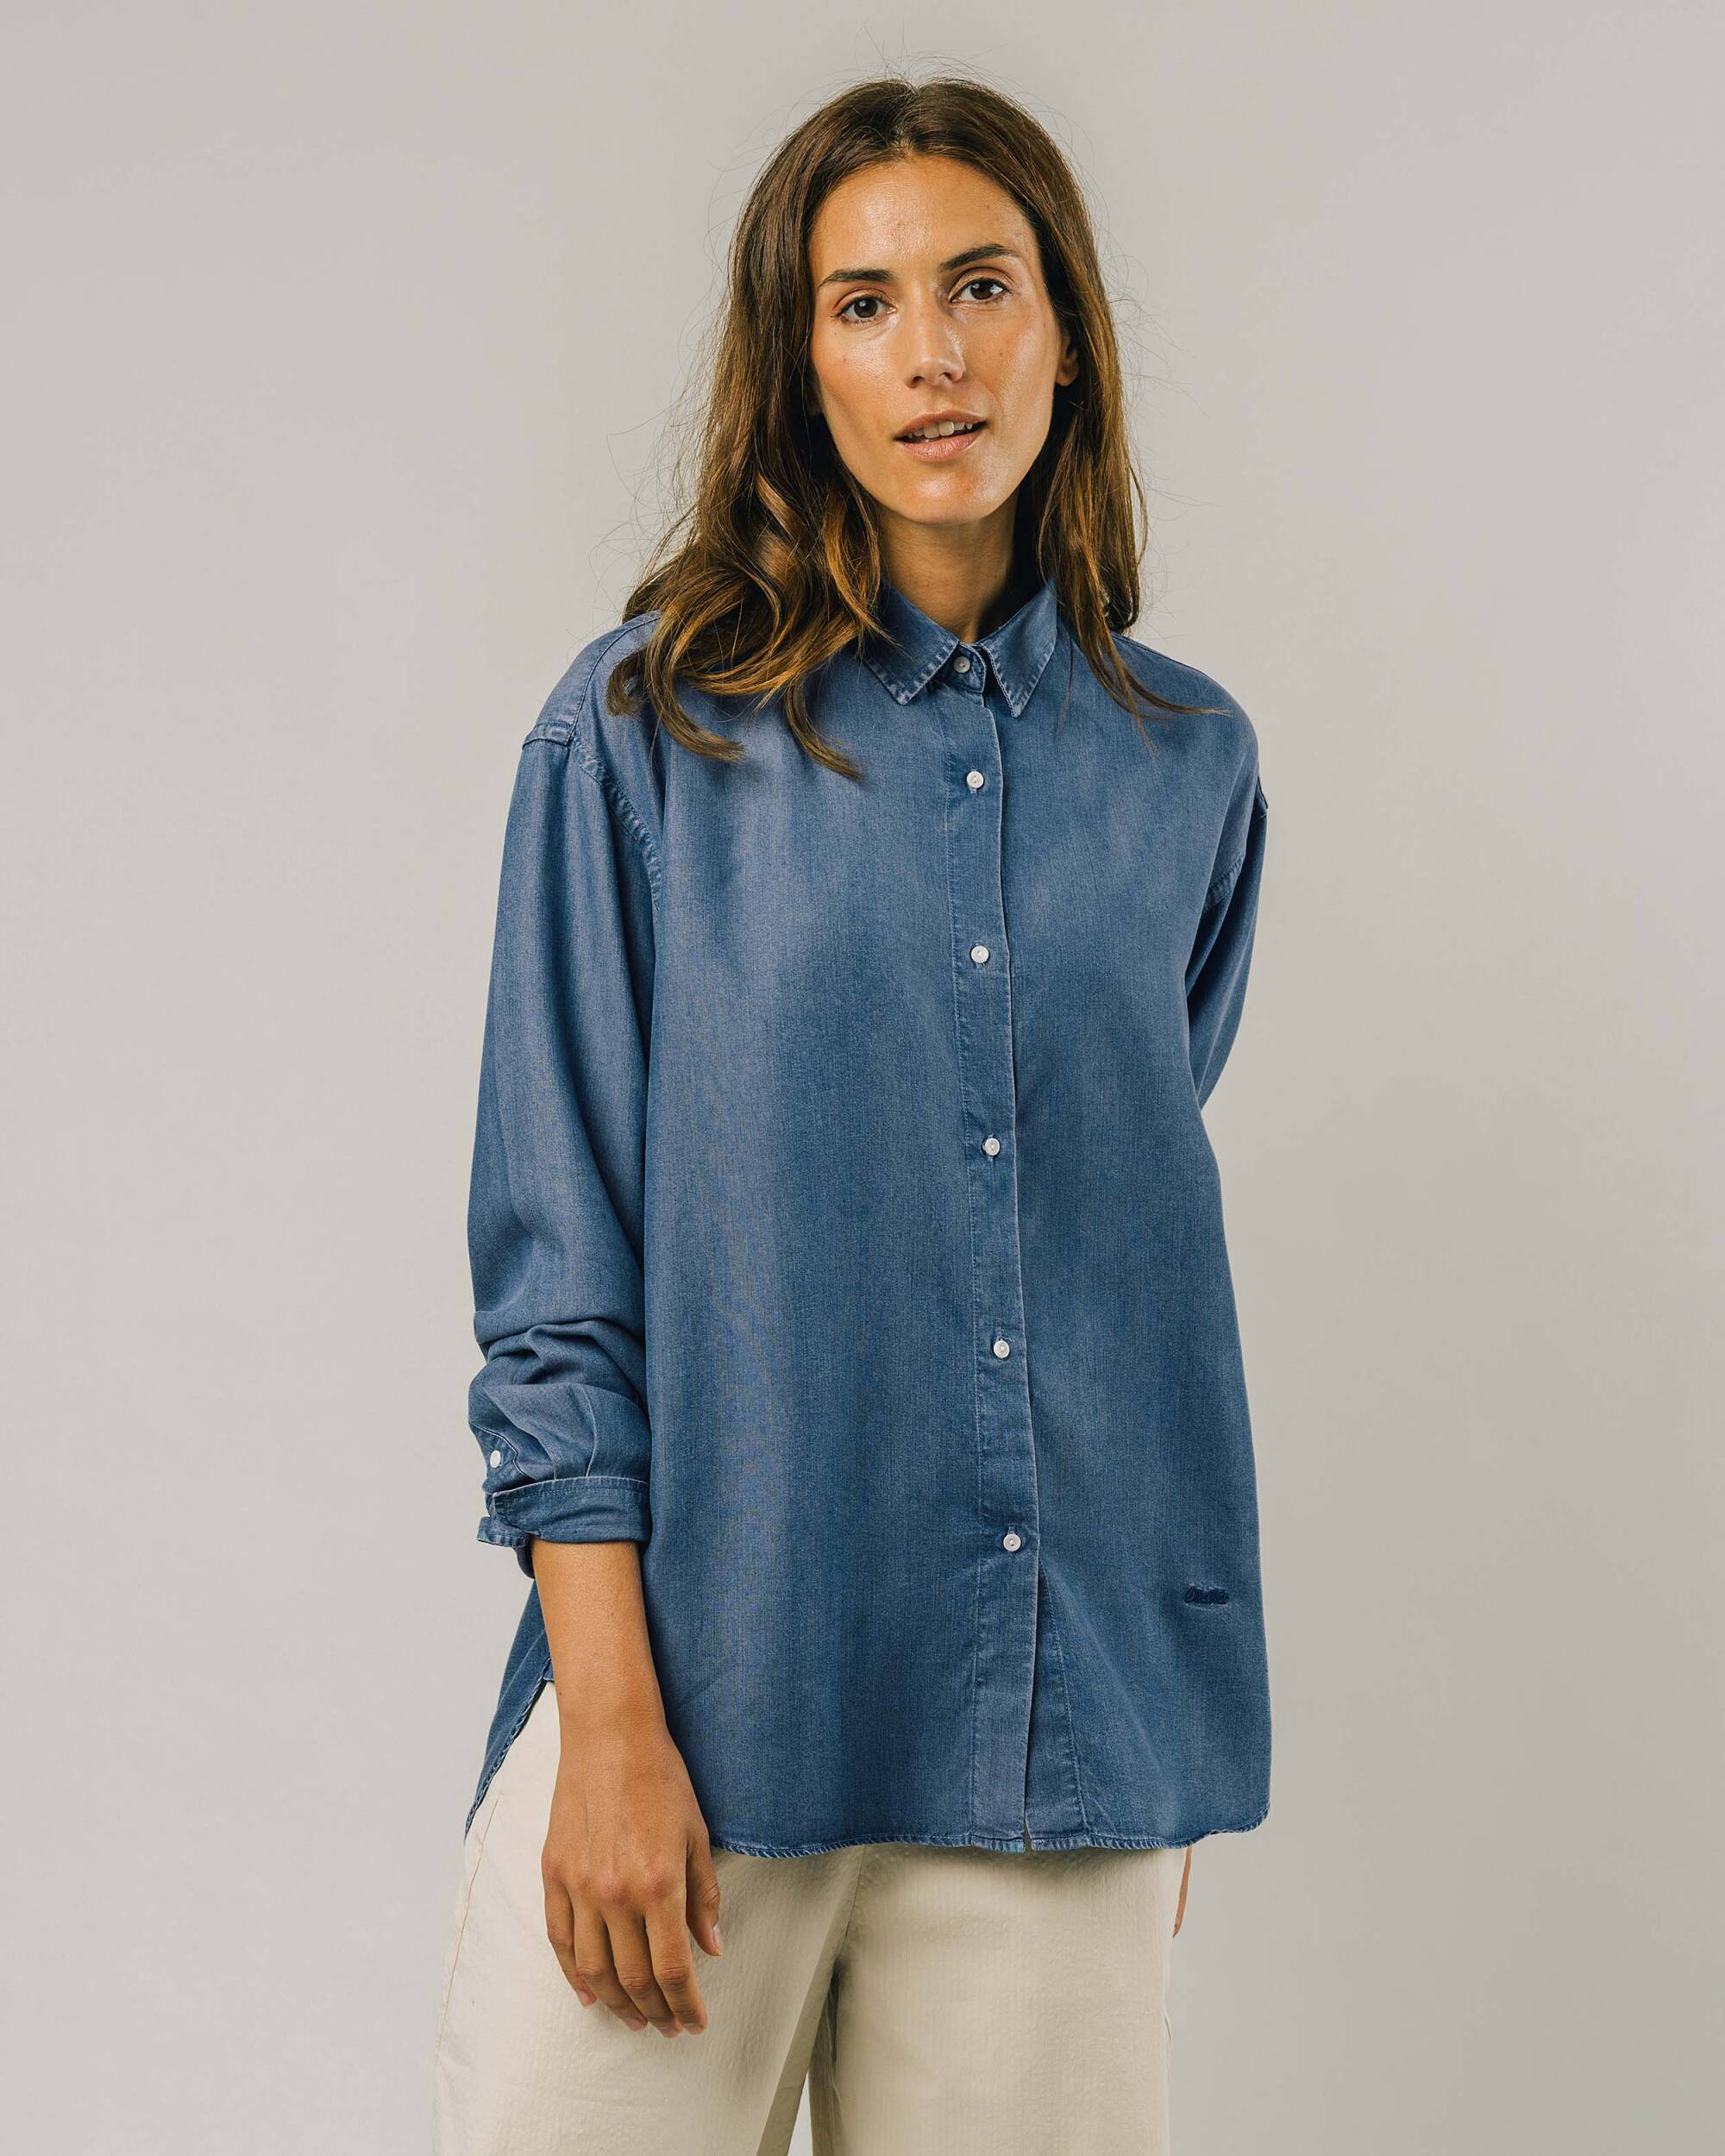 Blue, long-sleeved denim blouse made from 100% Tencel Lyocel from Brava Fabrics